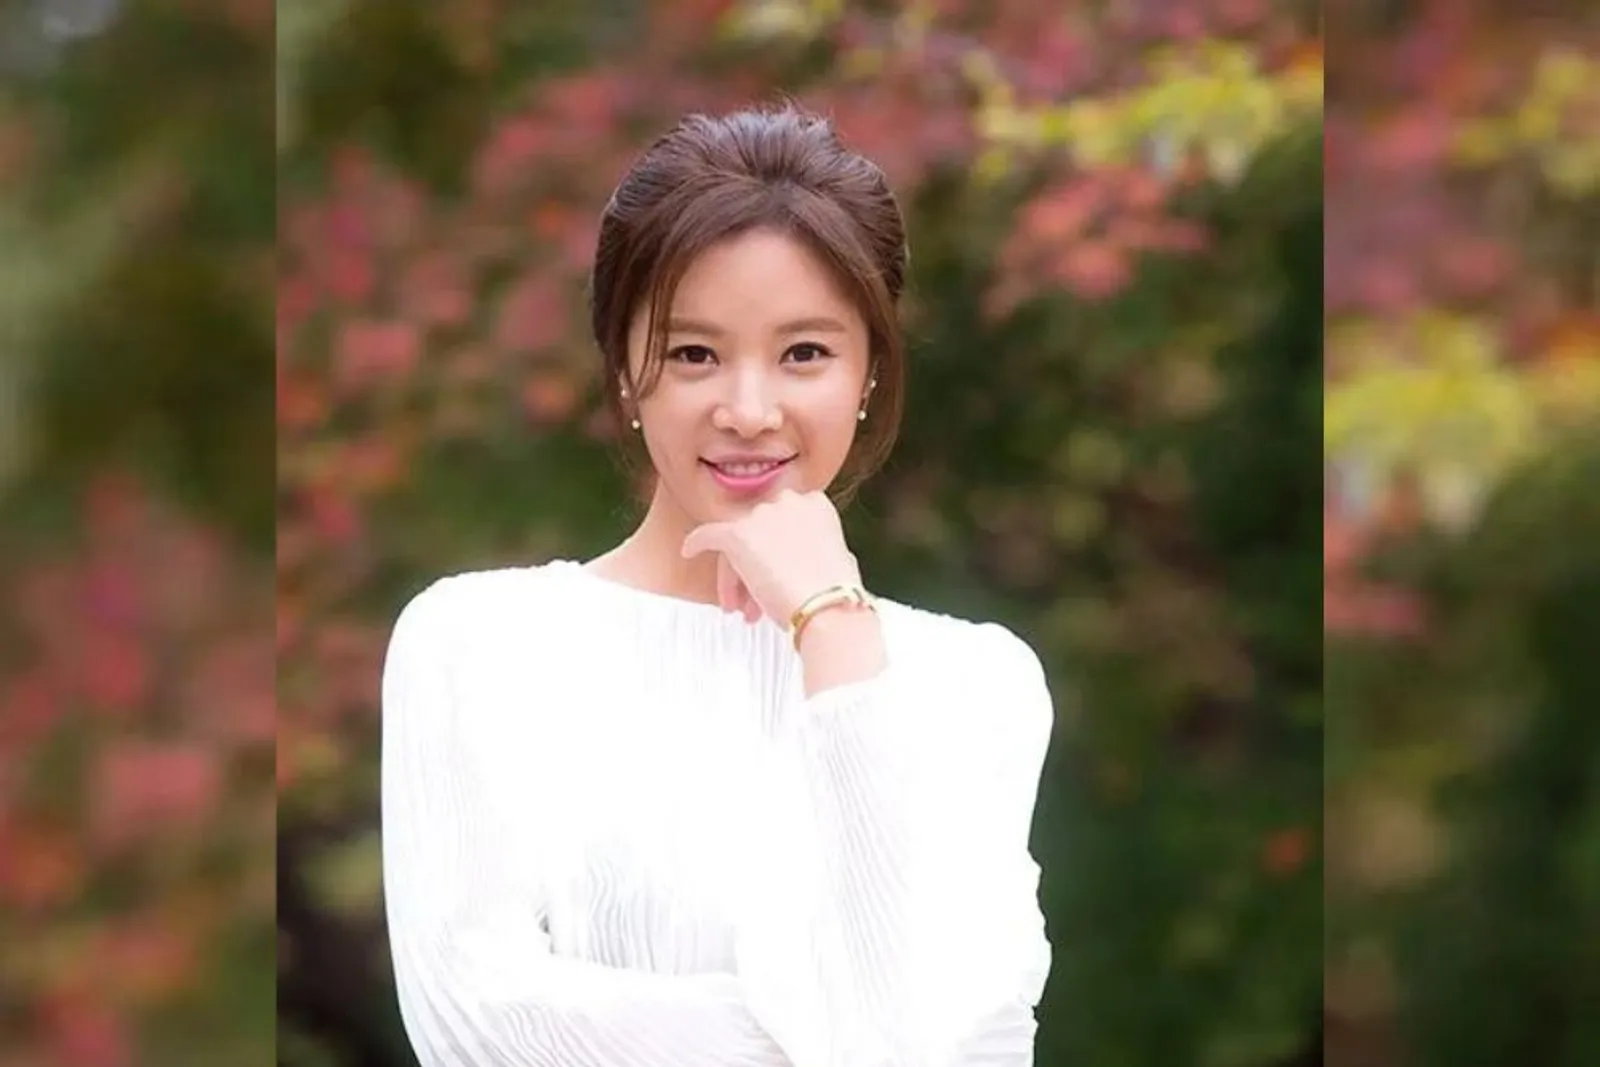 Berujung Maaf, Kronologi Hwang Jung Eum Salah Tuduh Selingkuhan Suami